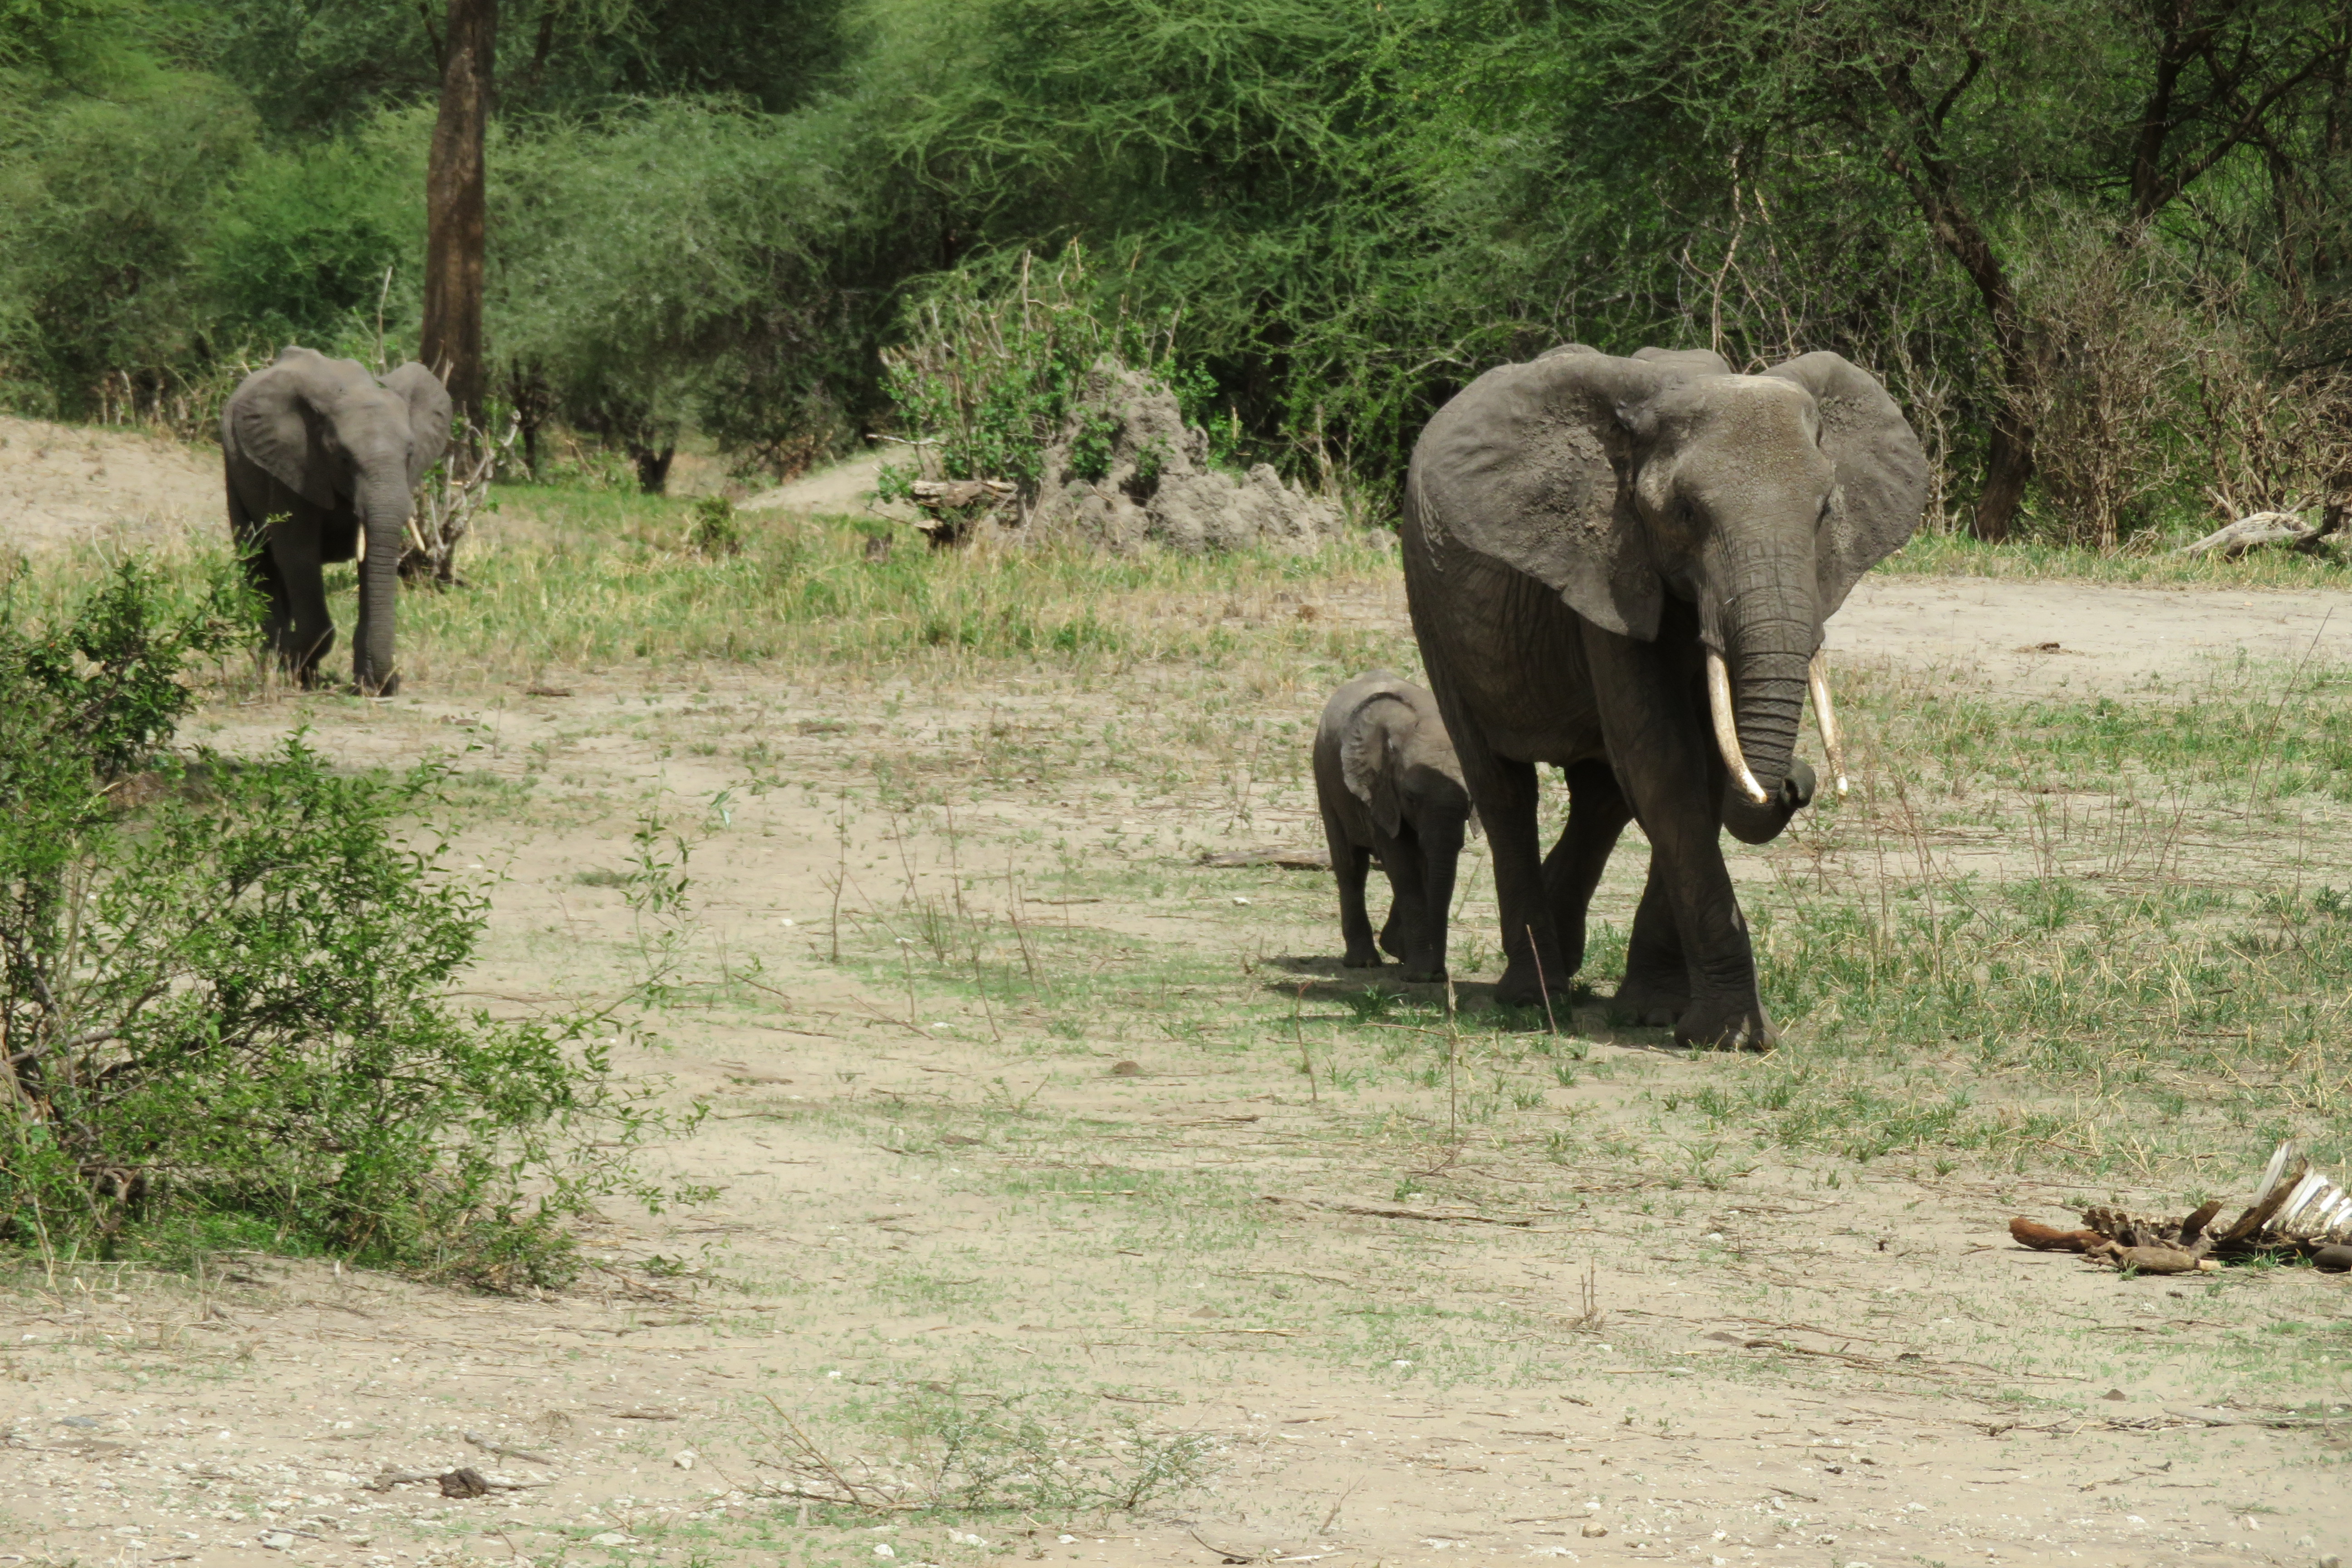 Elephants while on Shadows of Africa safari in Tarangire